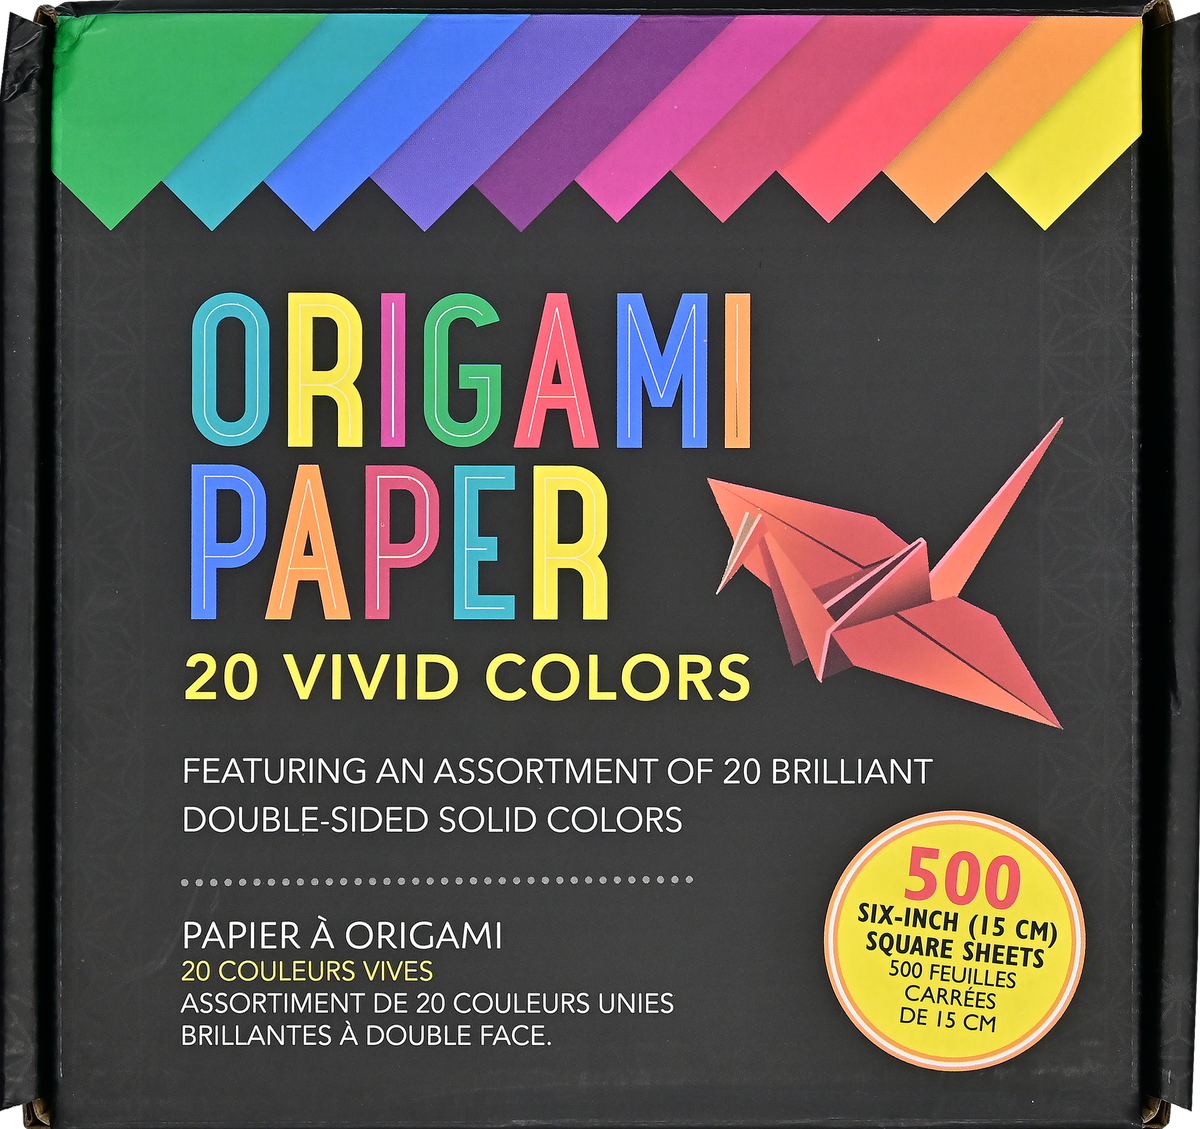 Peter Pauper Origami Paper 20 Vivid Colors